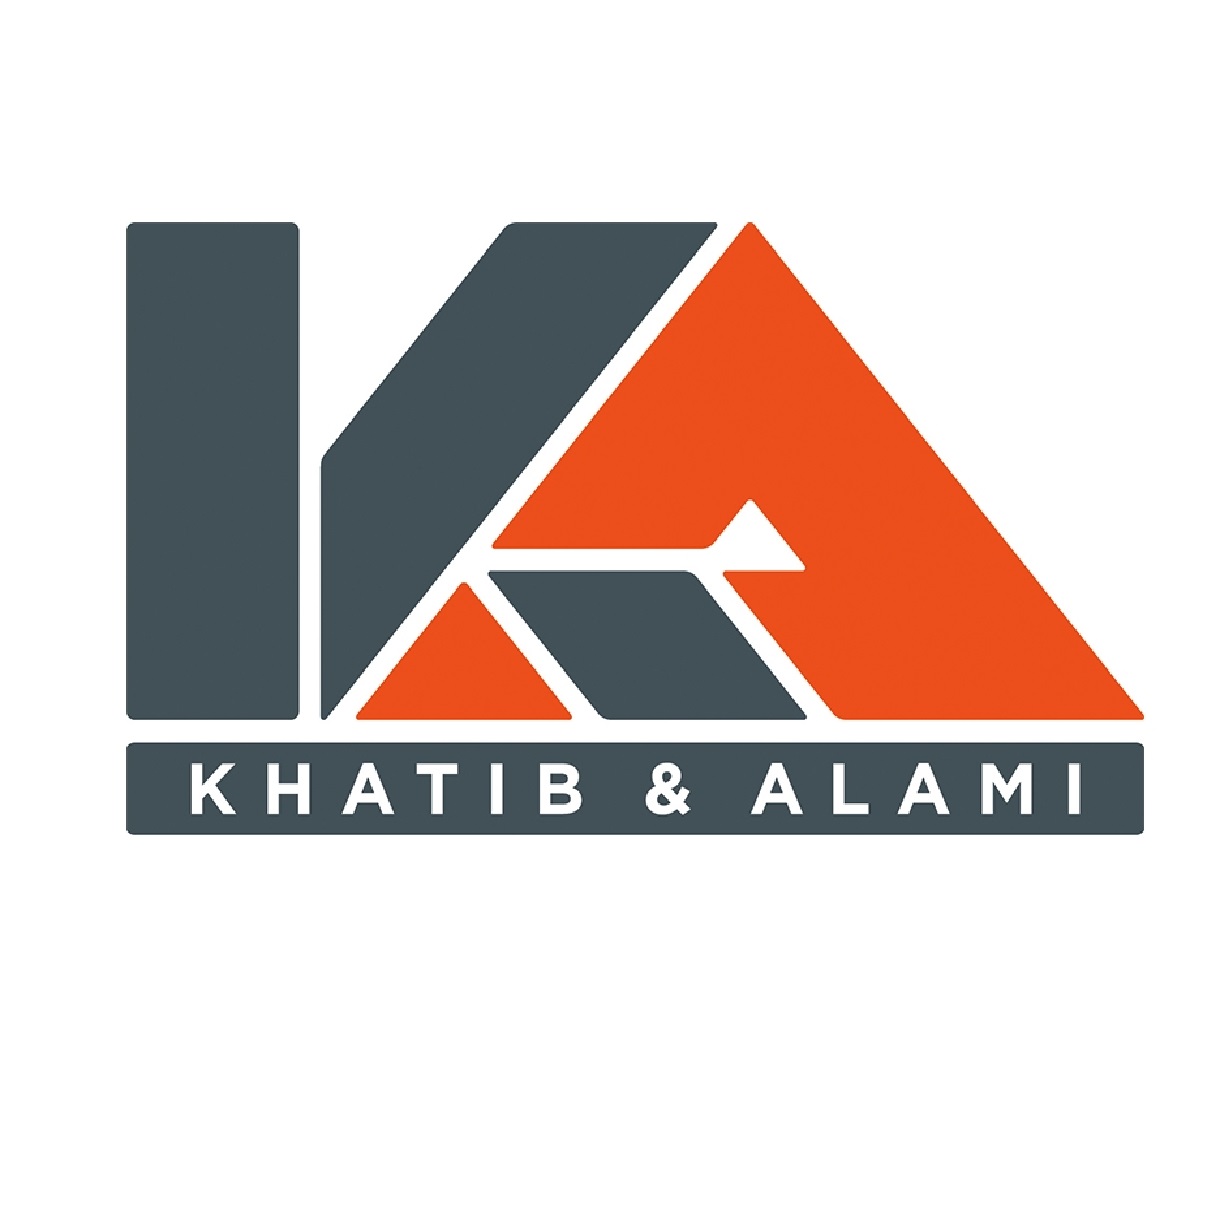 Khatib & Alami Egypt company